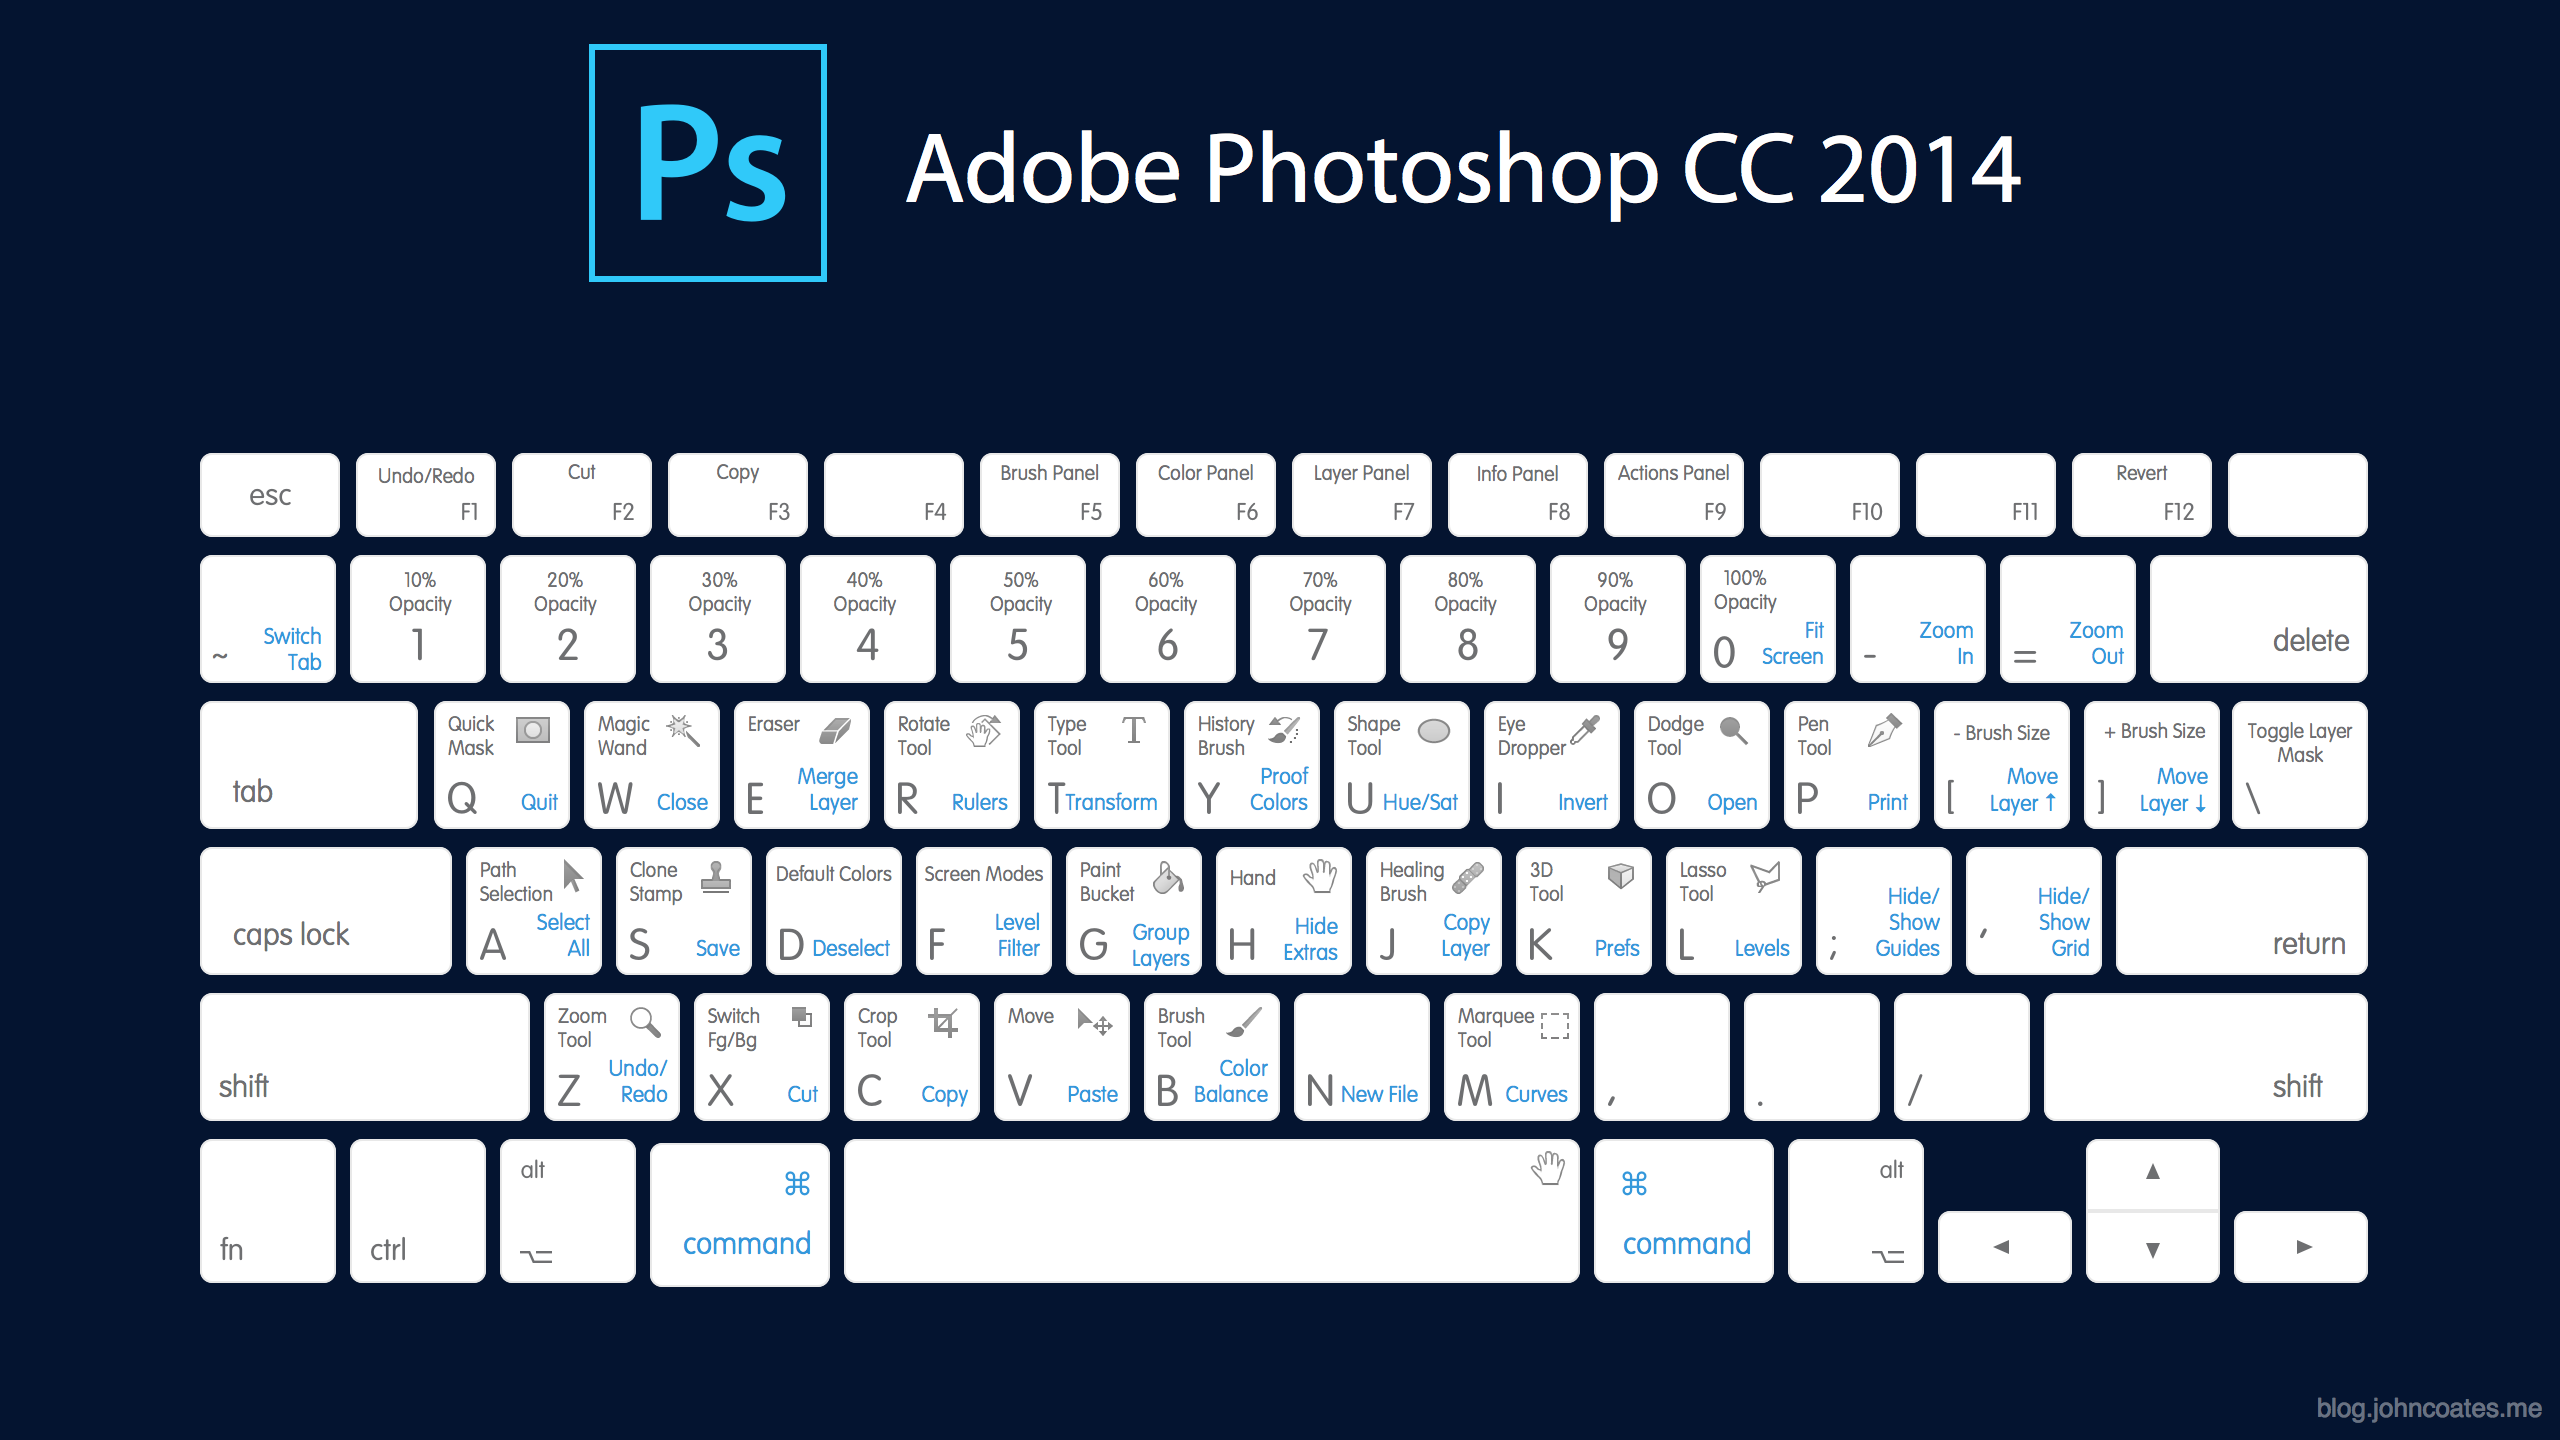 Photoshop CC 2014 Keyword Shortcut Cheat Sheet